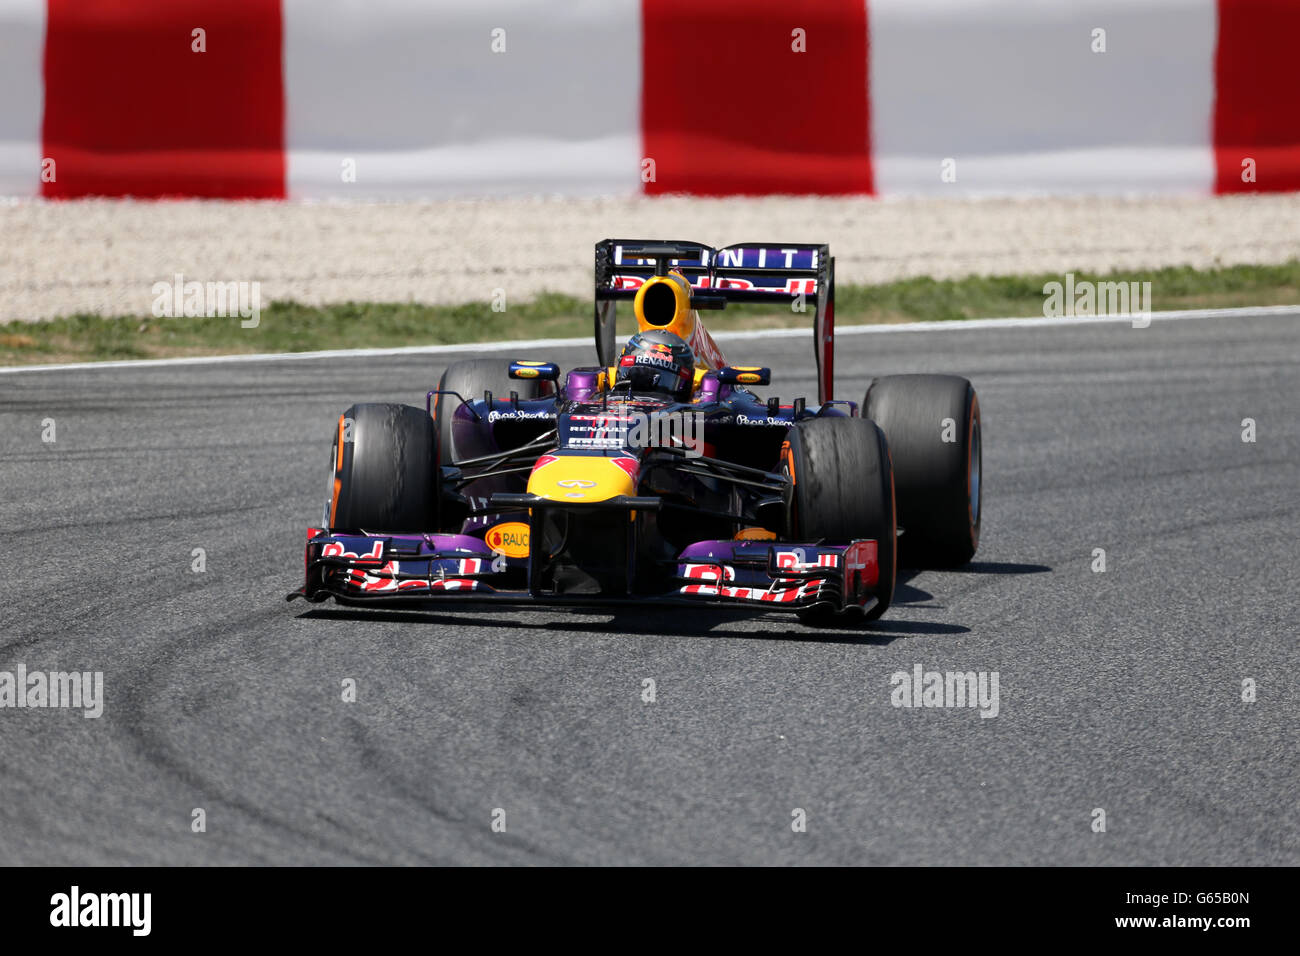 Auto - Formula One Motor Racing - Spanish Grand Prix - Race Day - Circuit de Catalunya. Red Bull's Sebastian Vettel during the Spanish Grand Prix Stock Photo